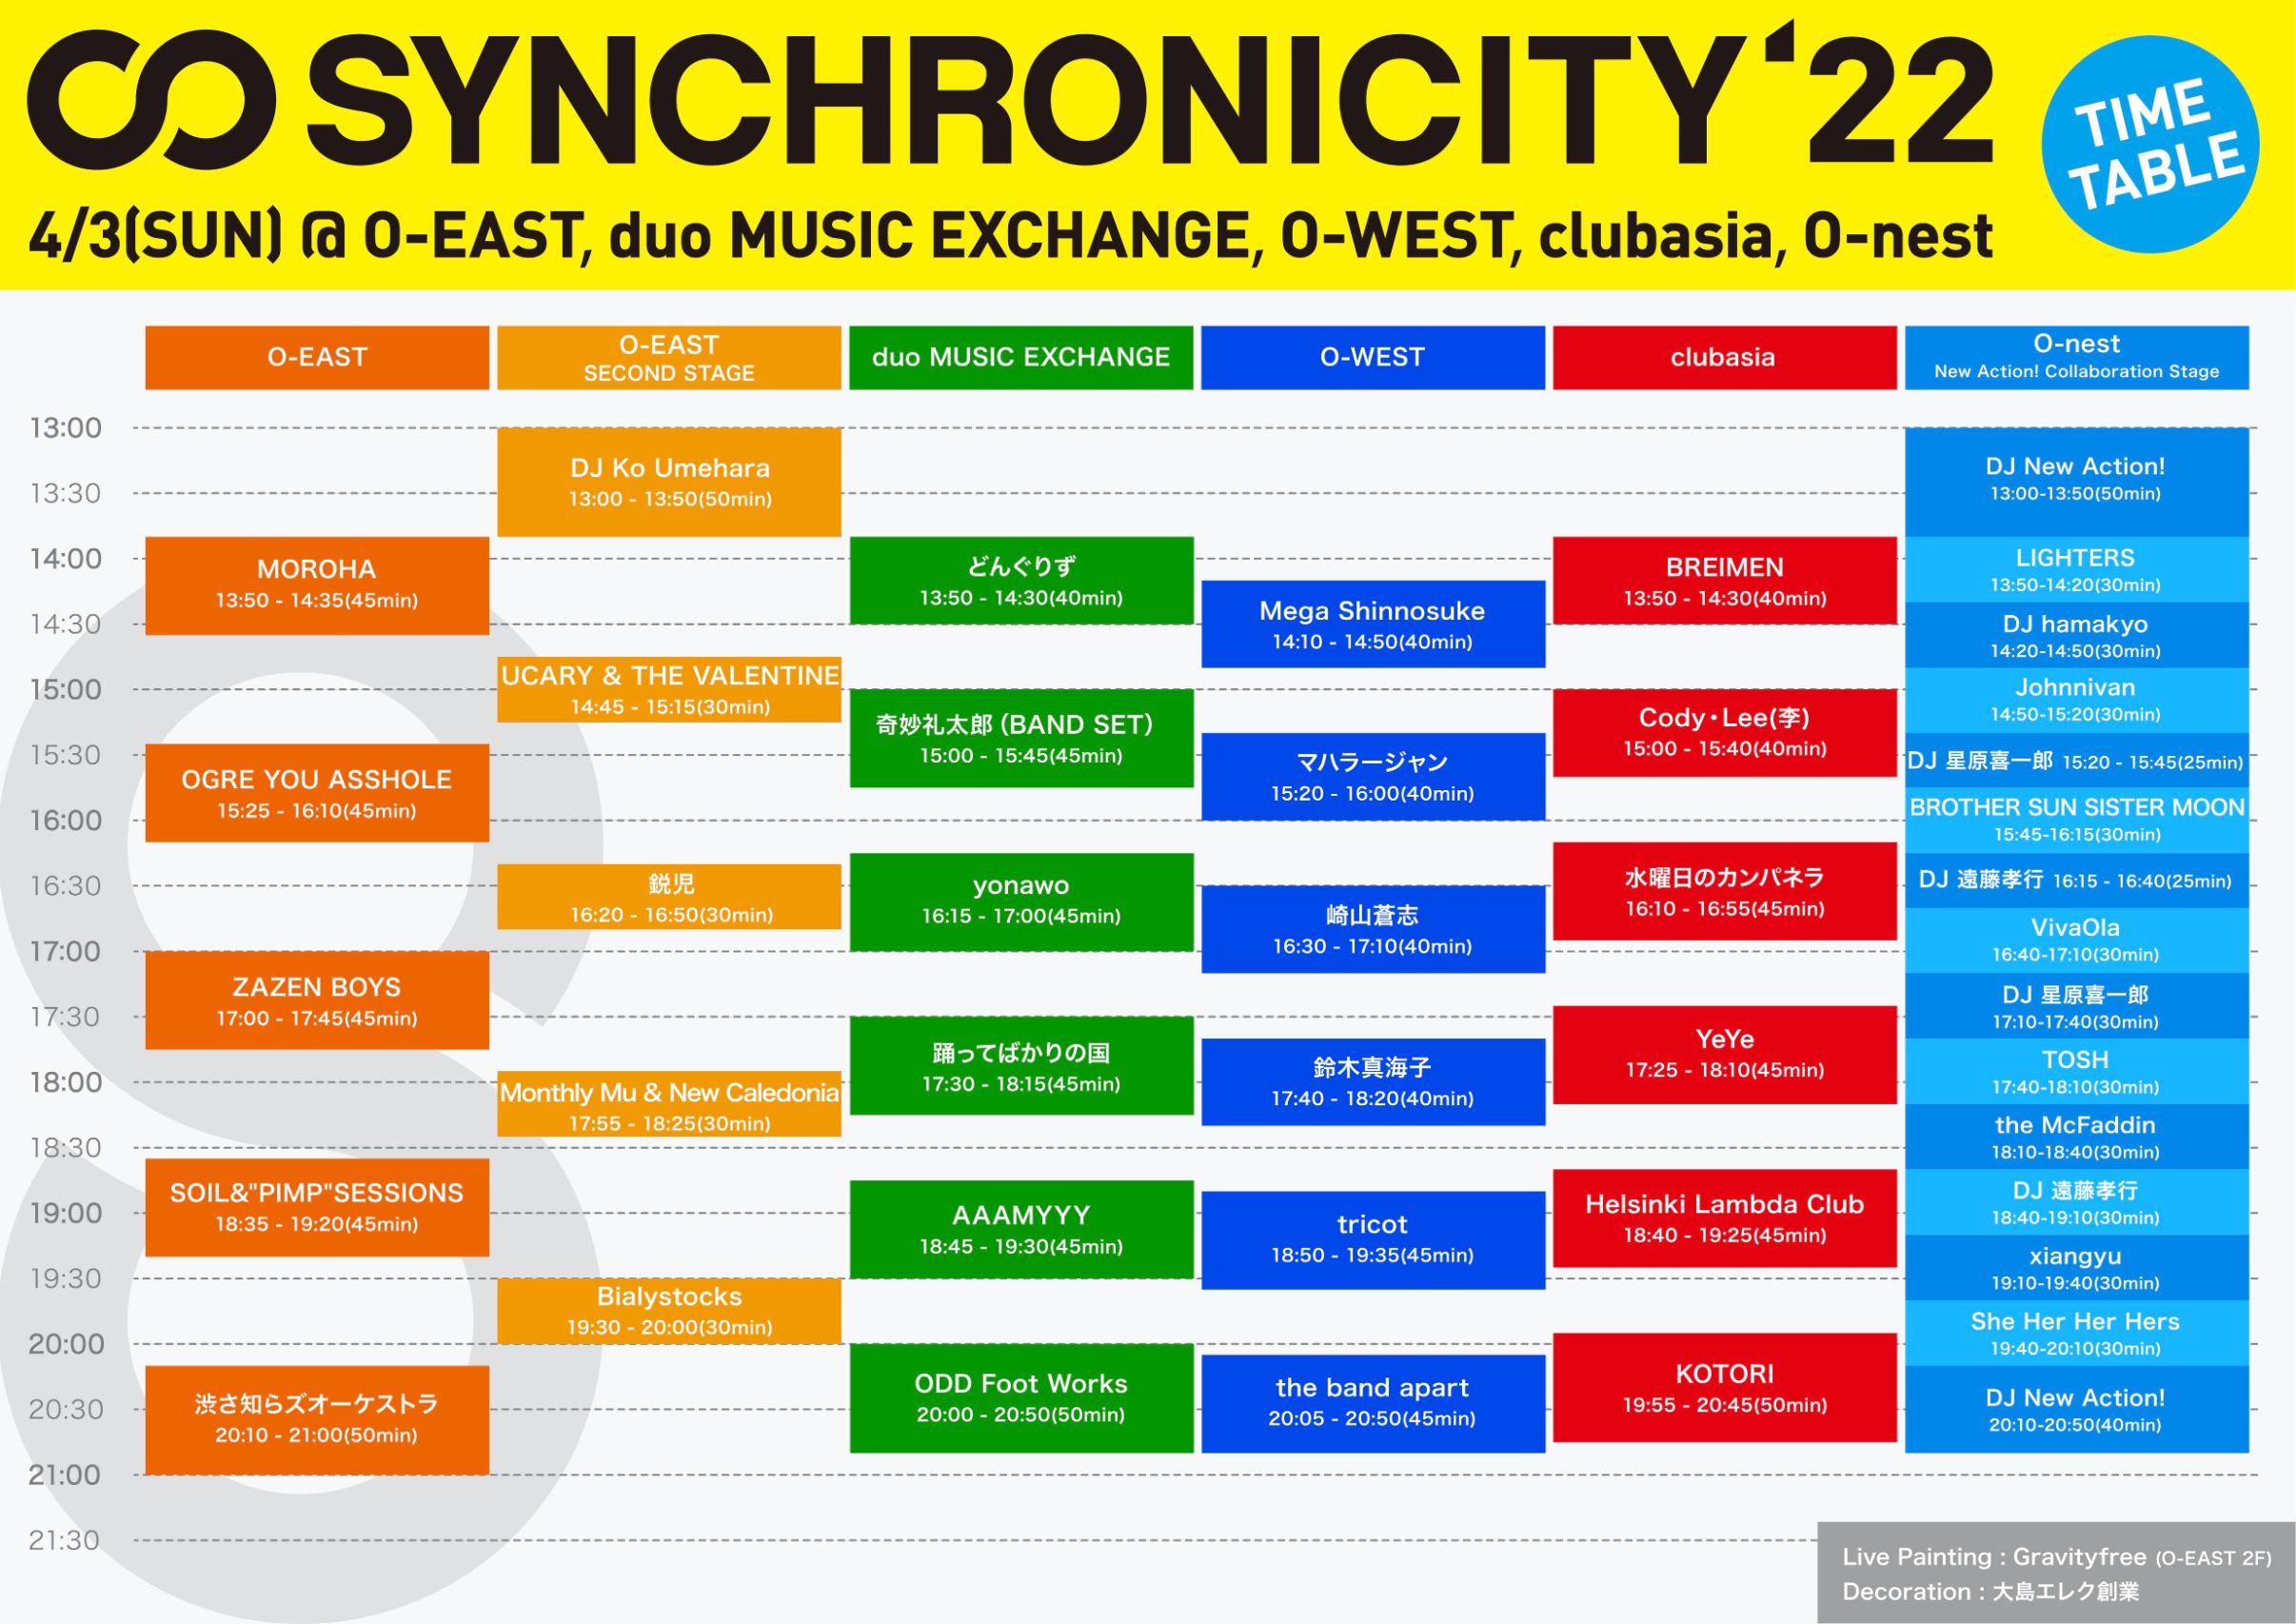 synchro22_timetable_220403_fix_comp